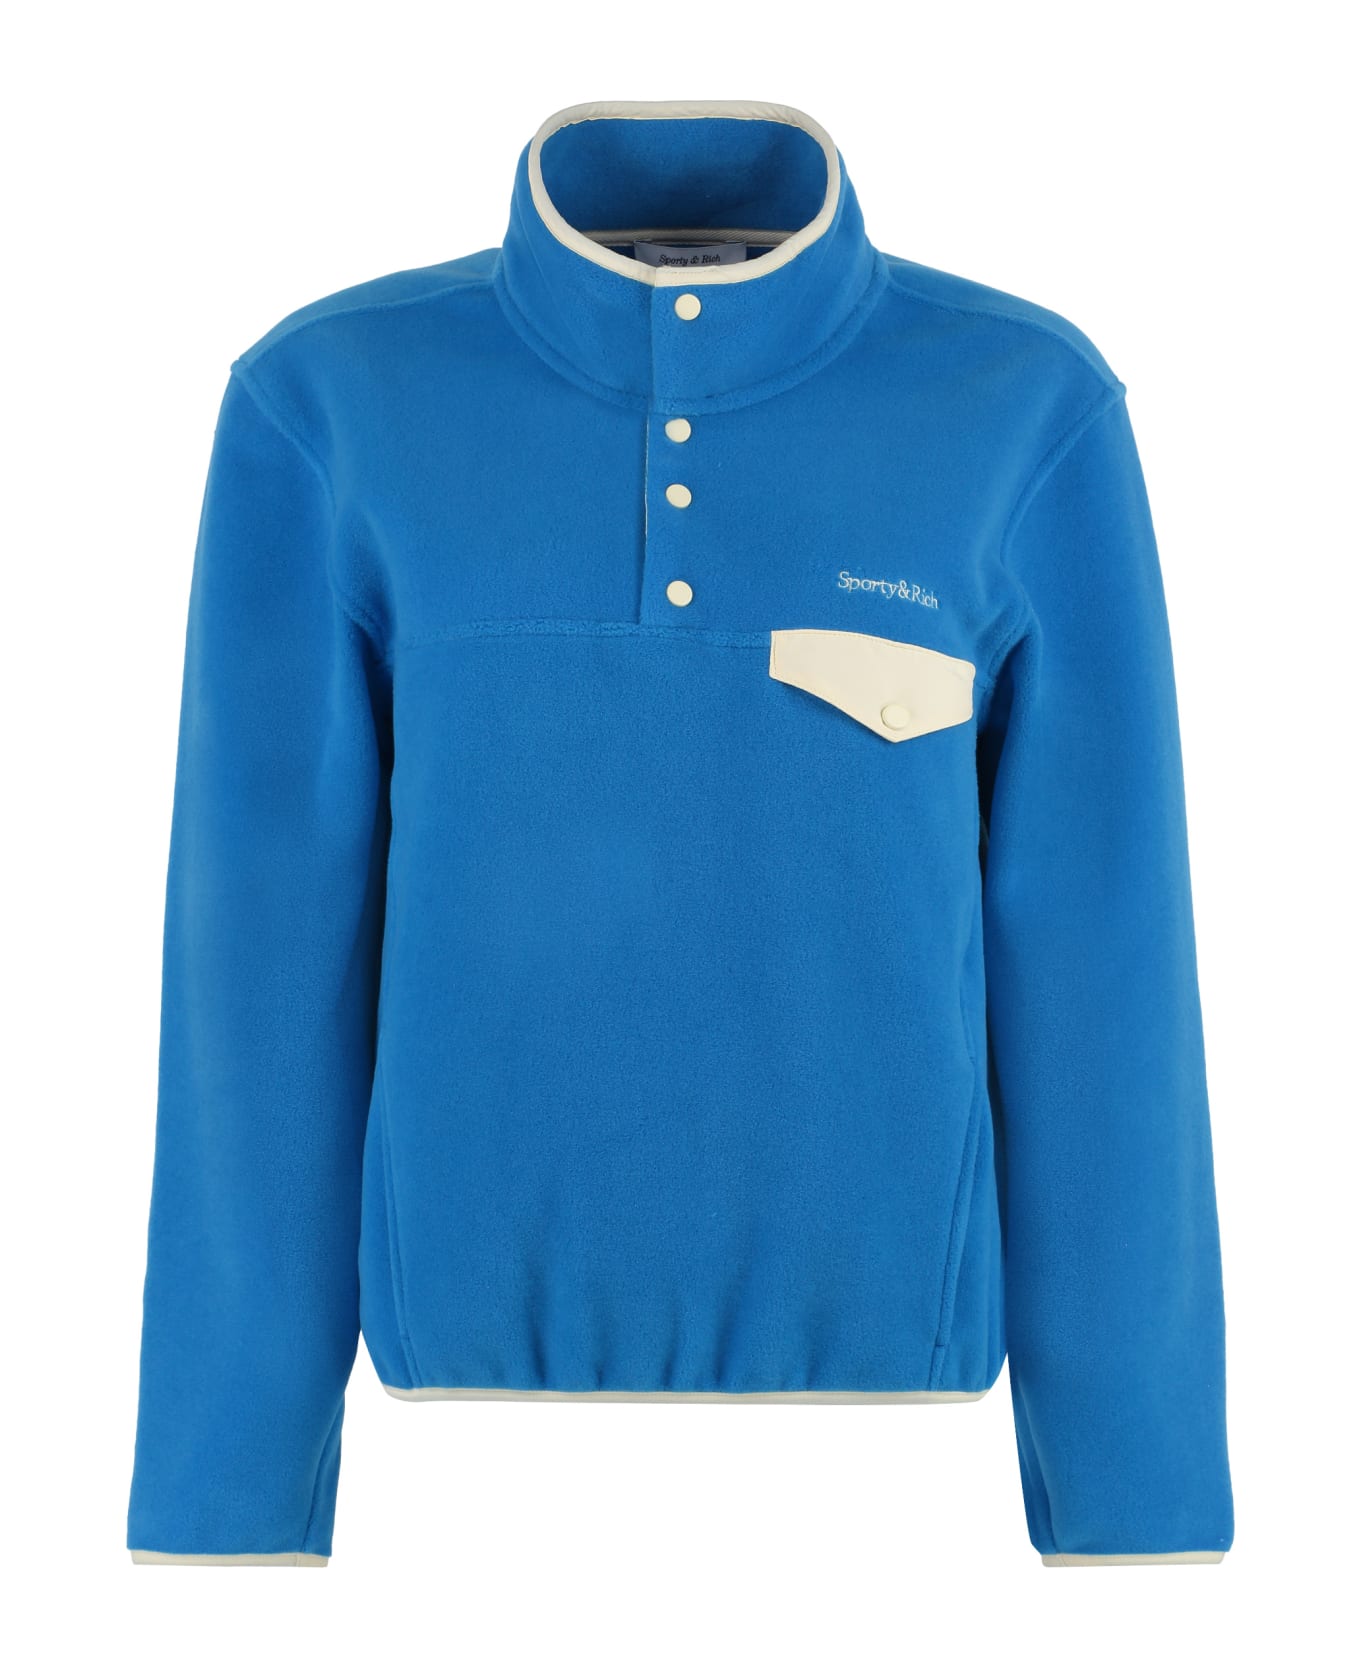 Sporty & Rich Stand-up Collar Fleece Sweatshirt - blue